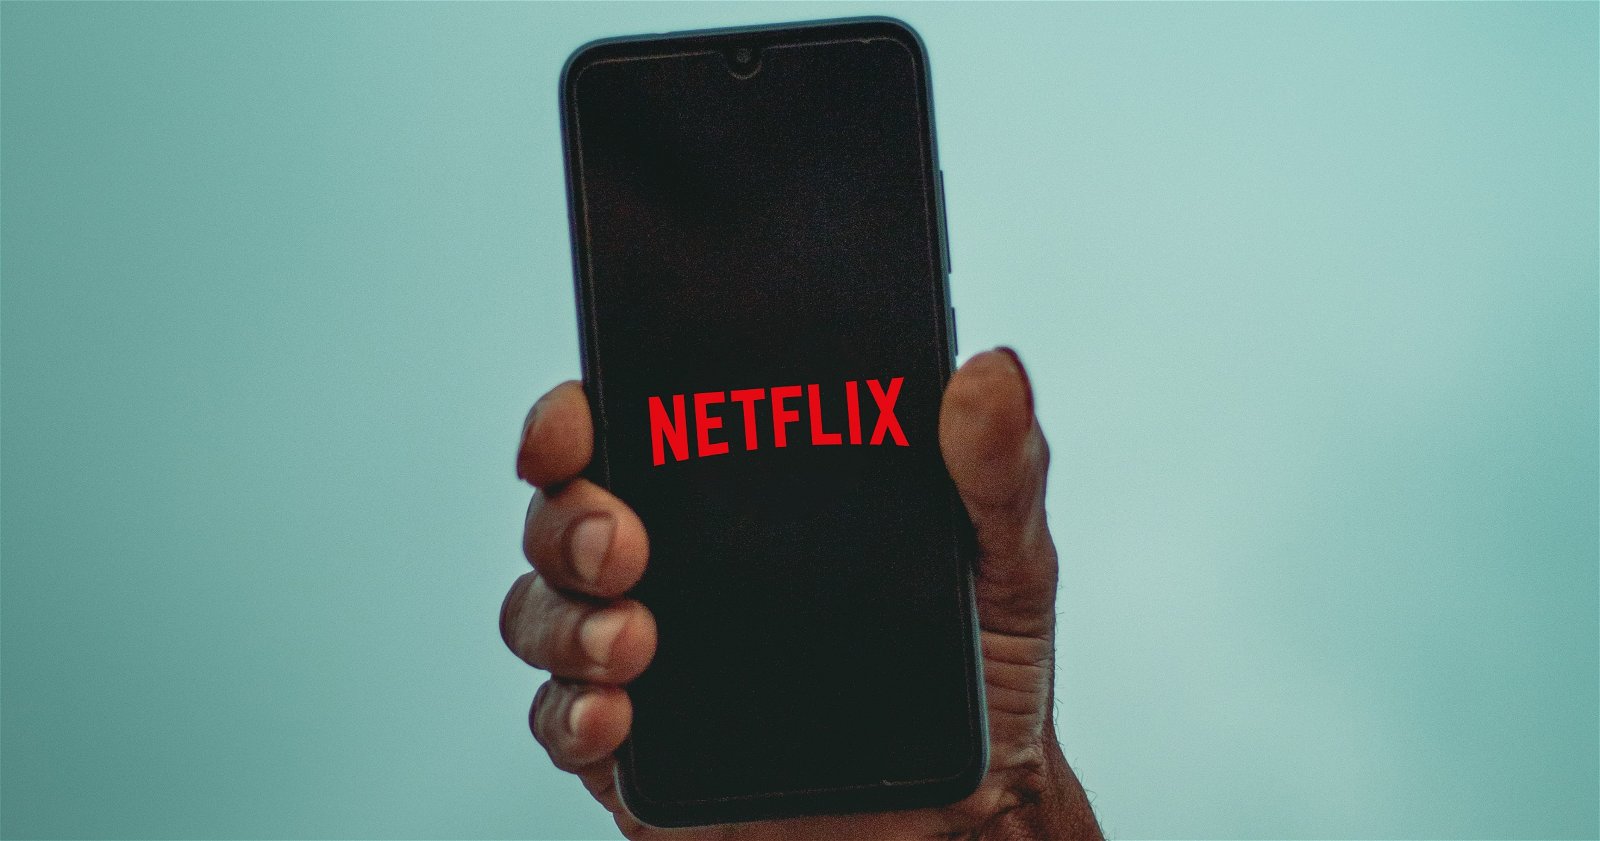 App de Netflix en un smartphone Android.